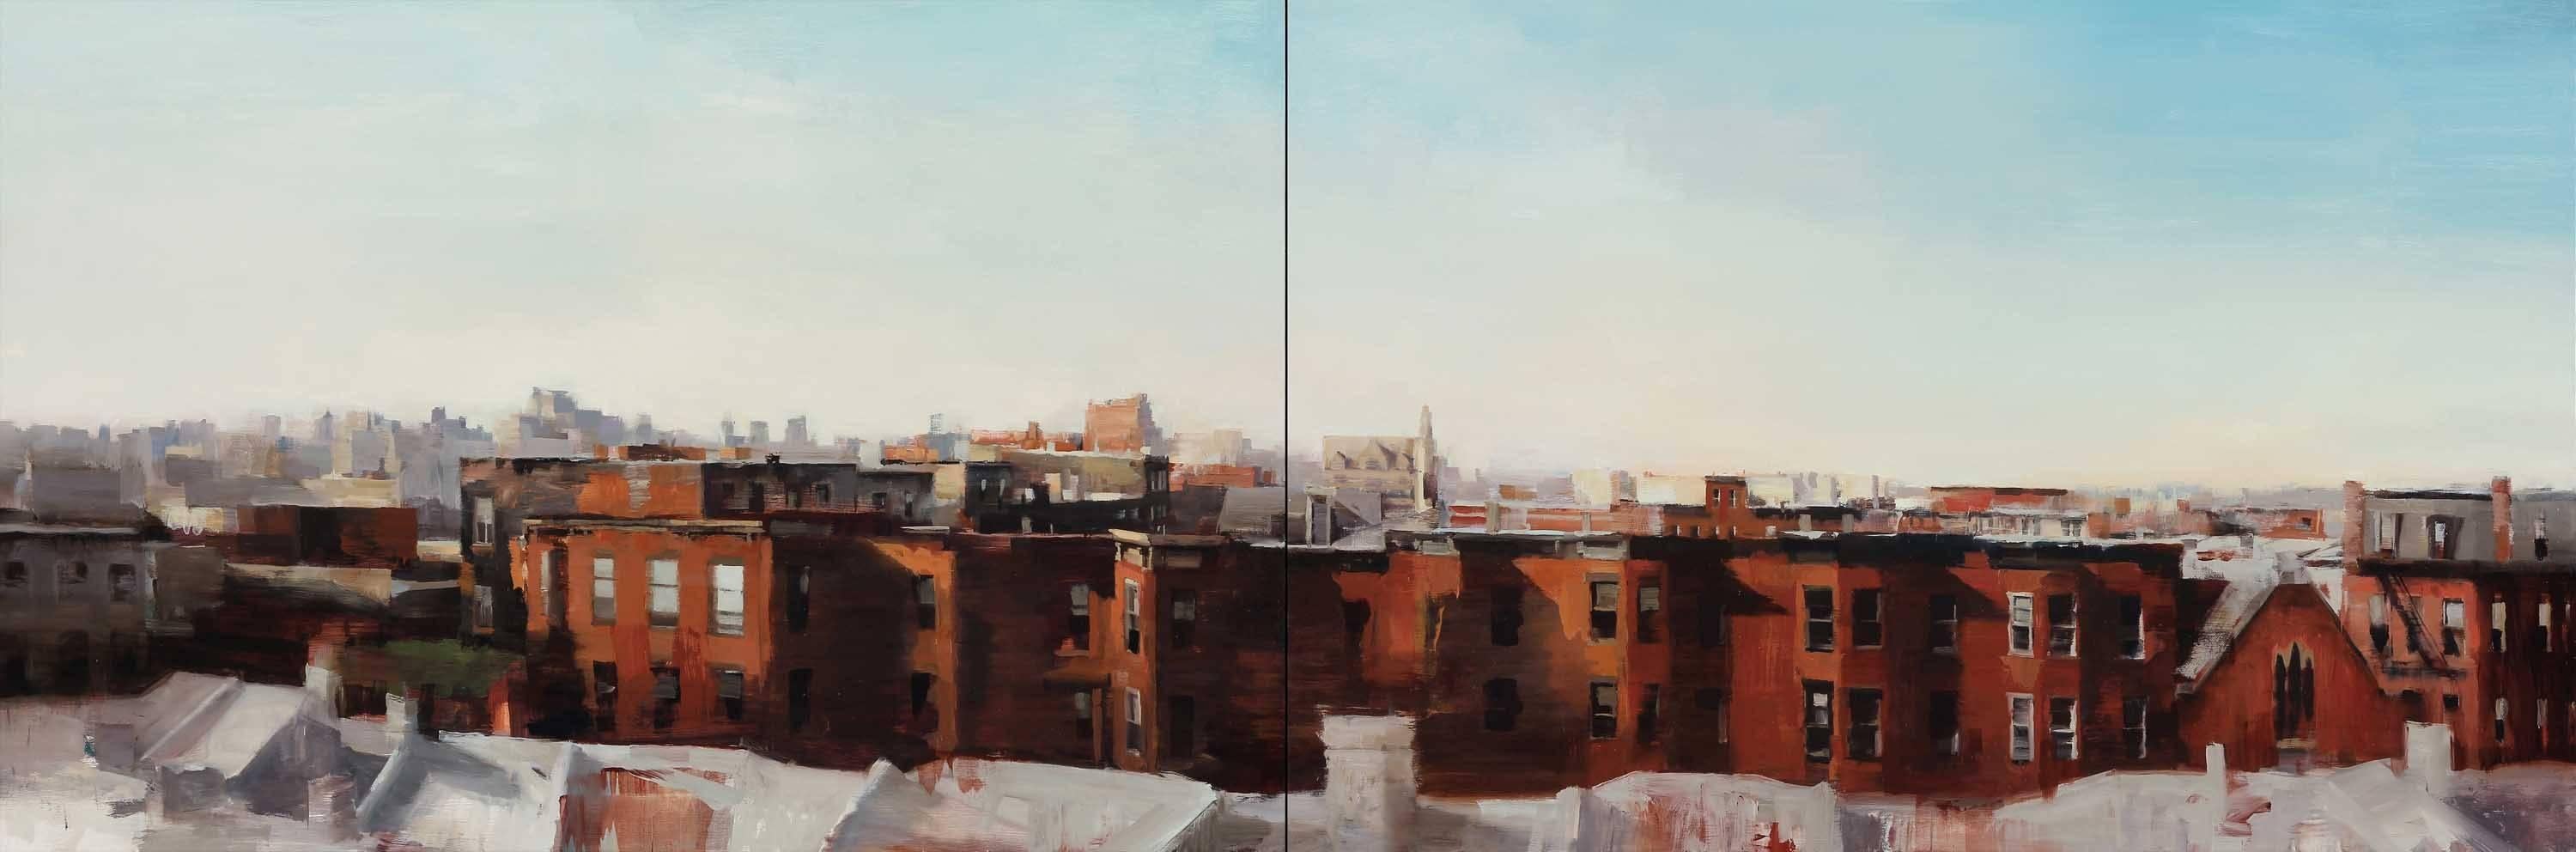 BROOKLYN SUMMERTIME (DIPTYCH), red brick buildings, nyc apartments, brooklyn - Art by Kim Cogan